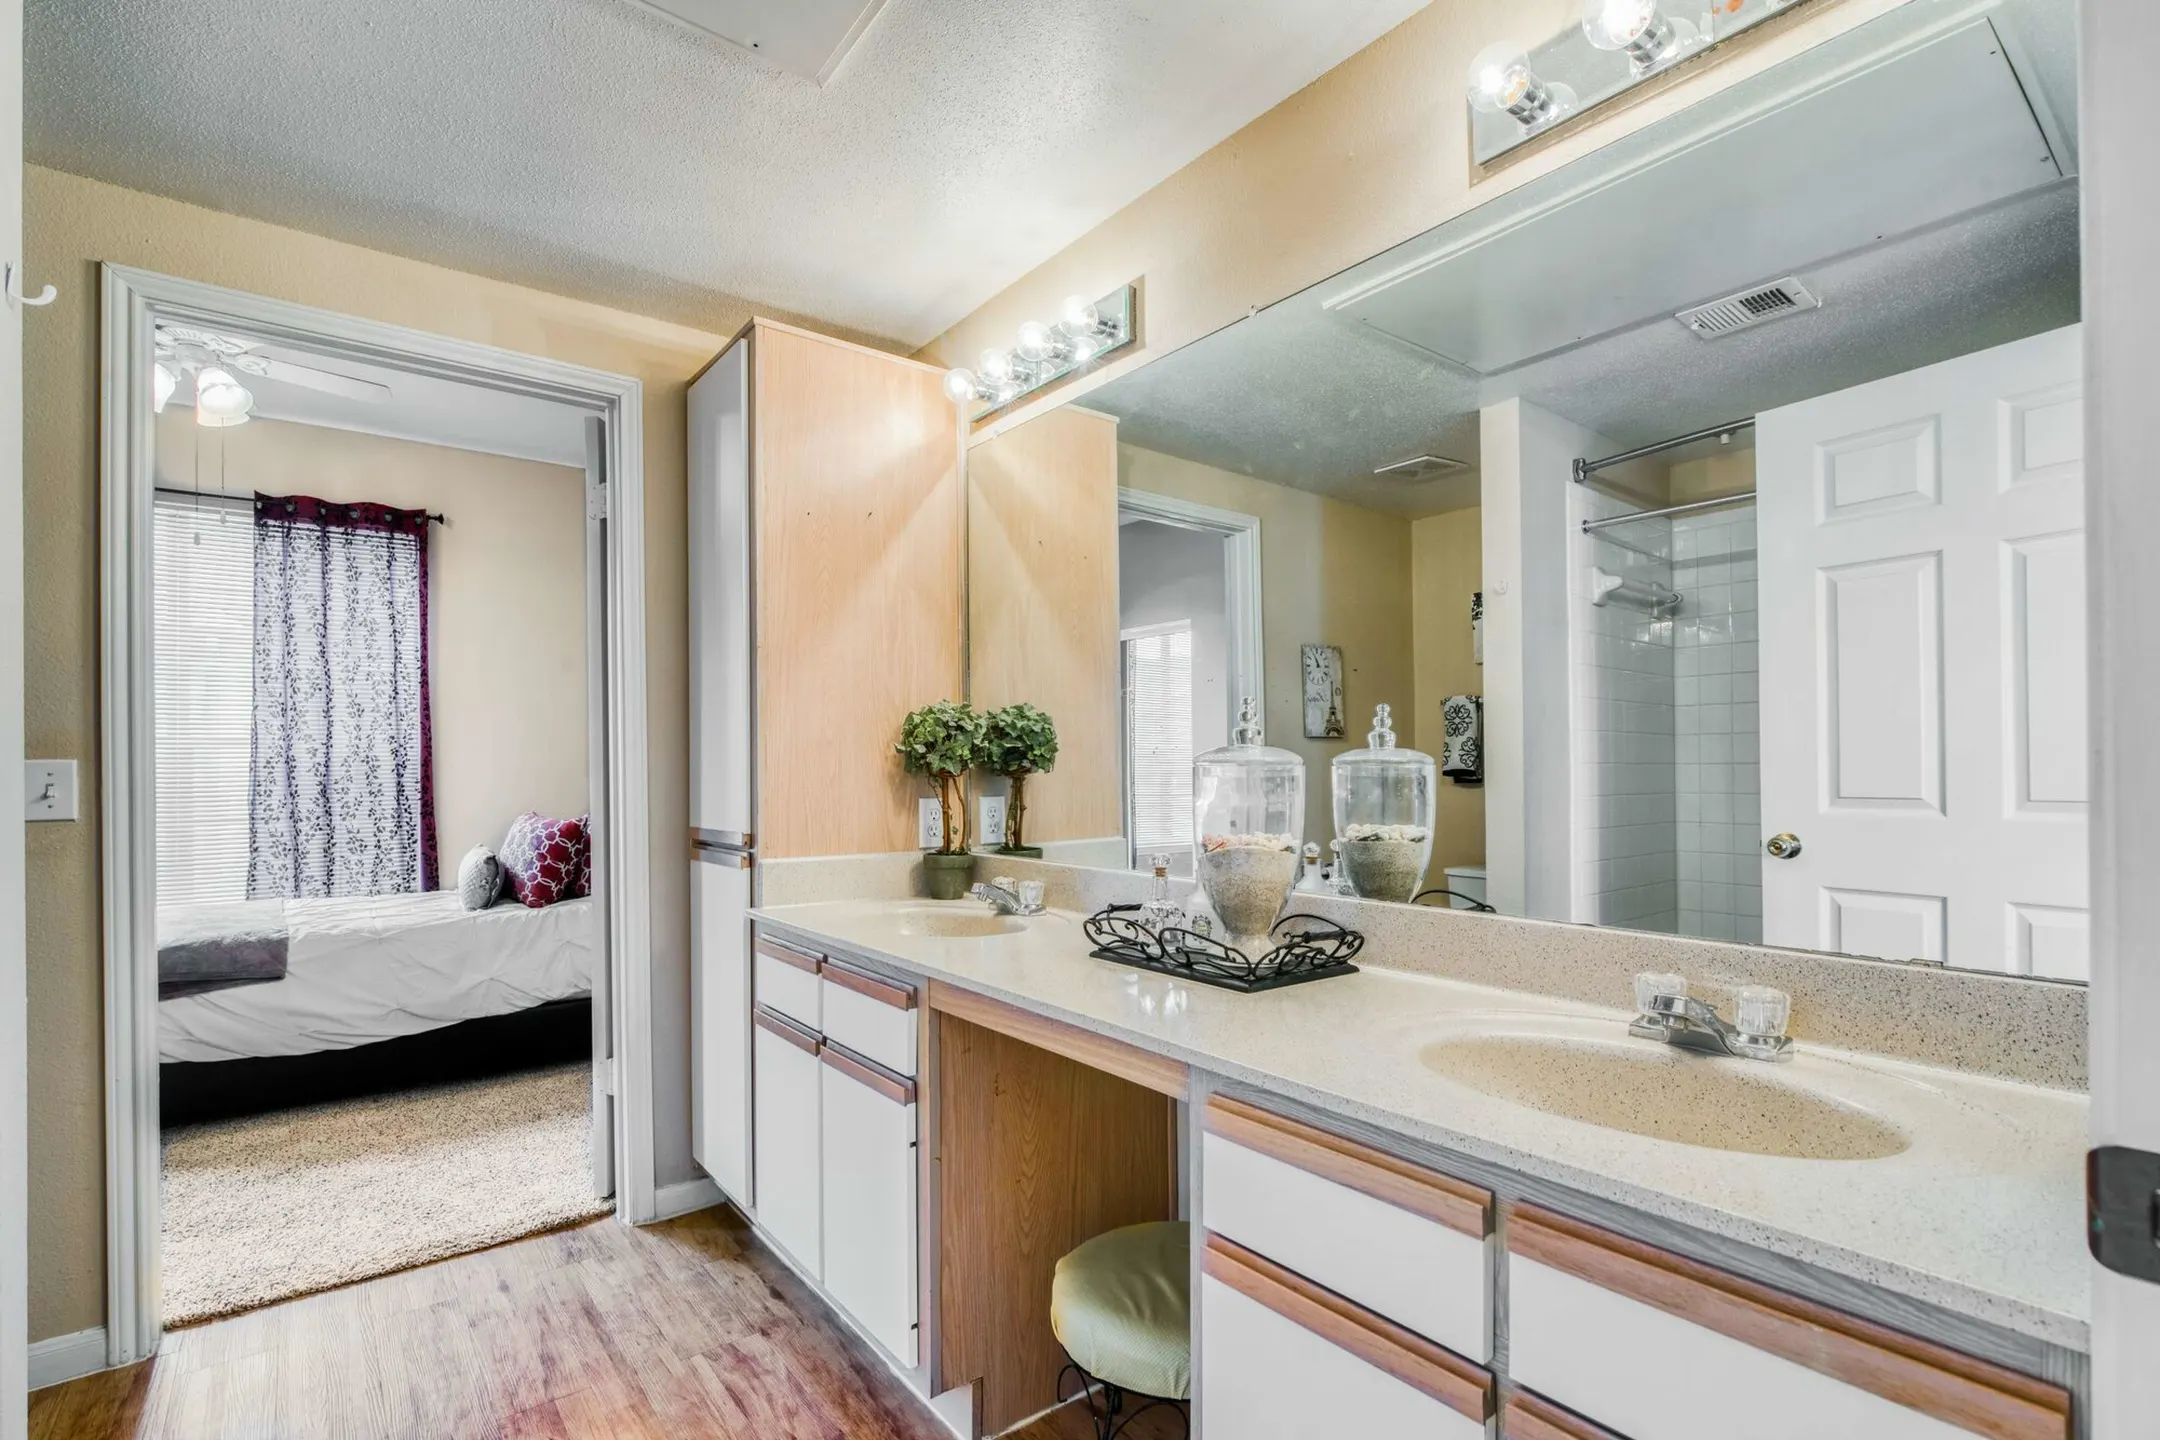 Bathroom - Farnham Park Apartments - Port Arthur, TX